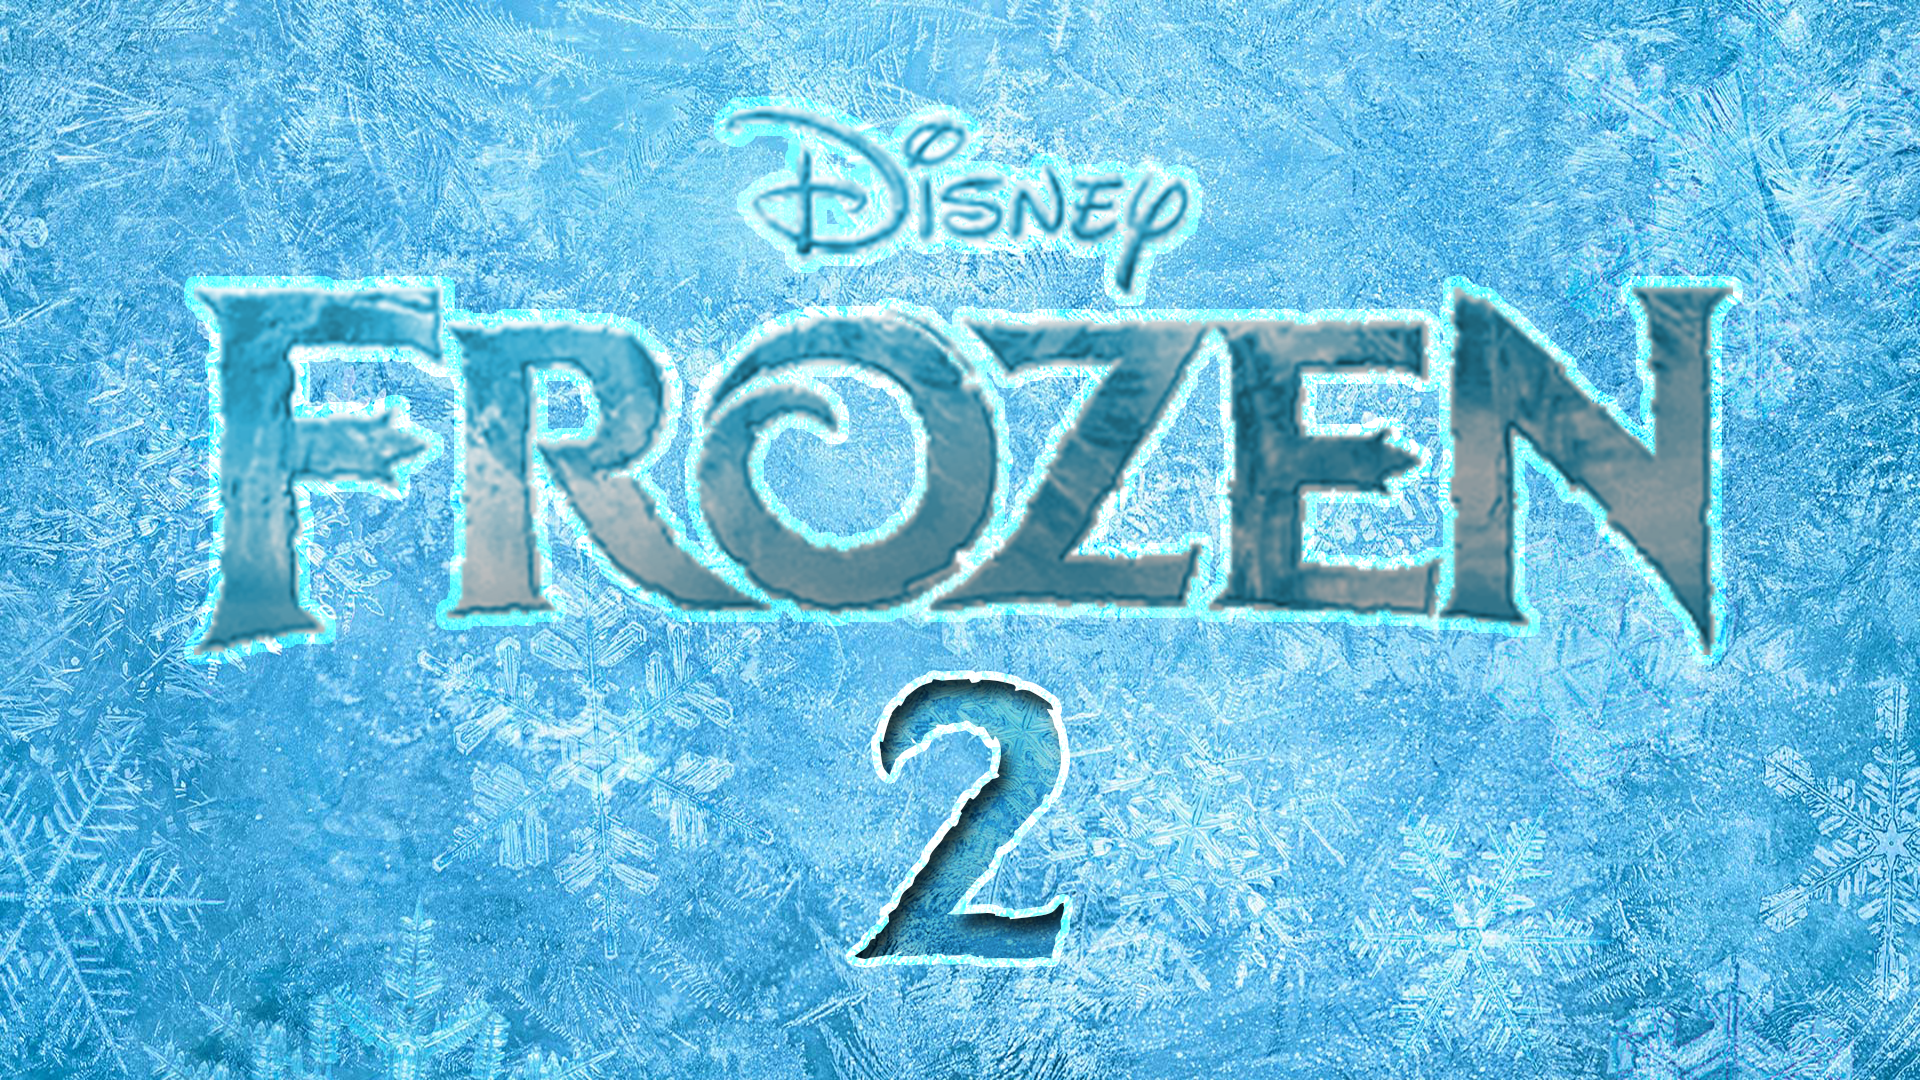 Frozen Logo Wallpapers